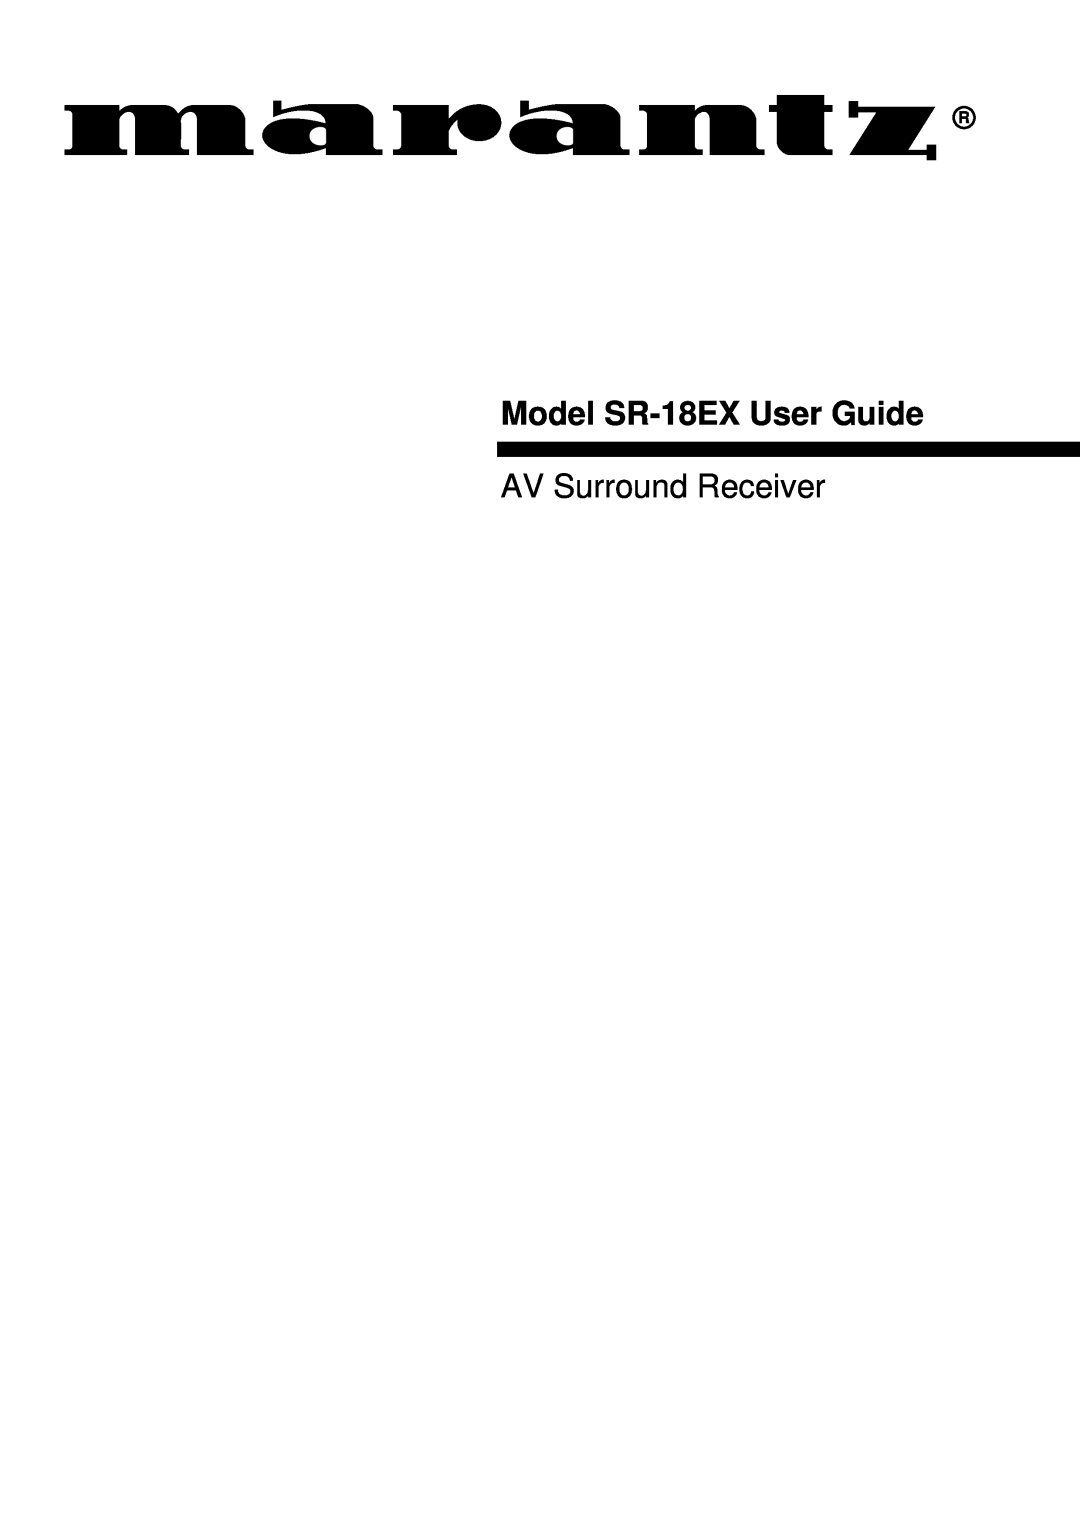 Marantz manual Model SR-18EXUser Guide, AV Surround Receiver 